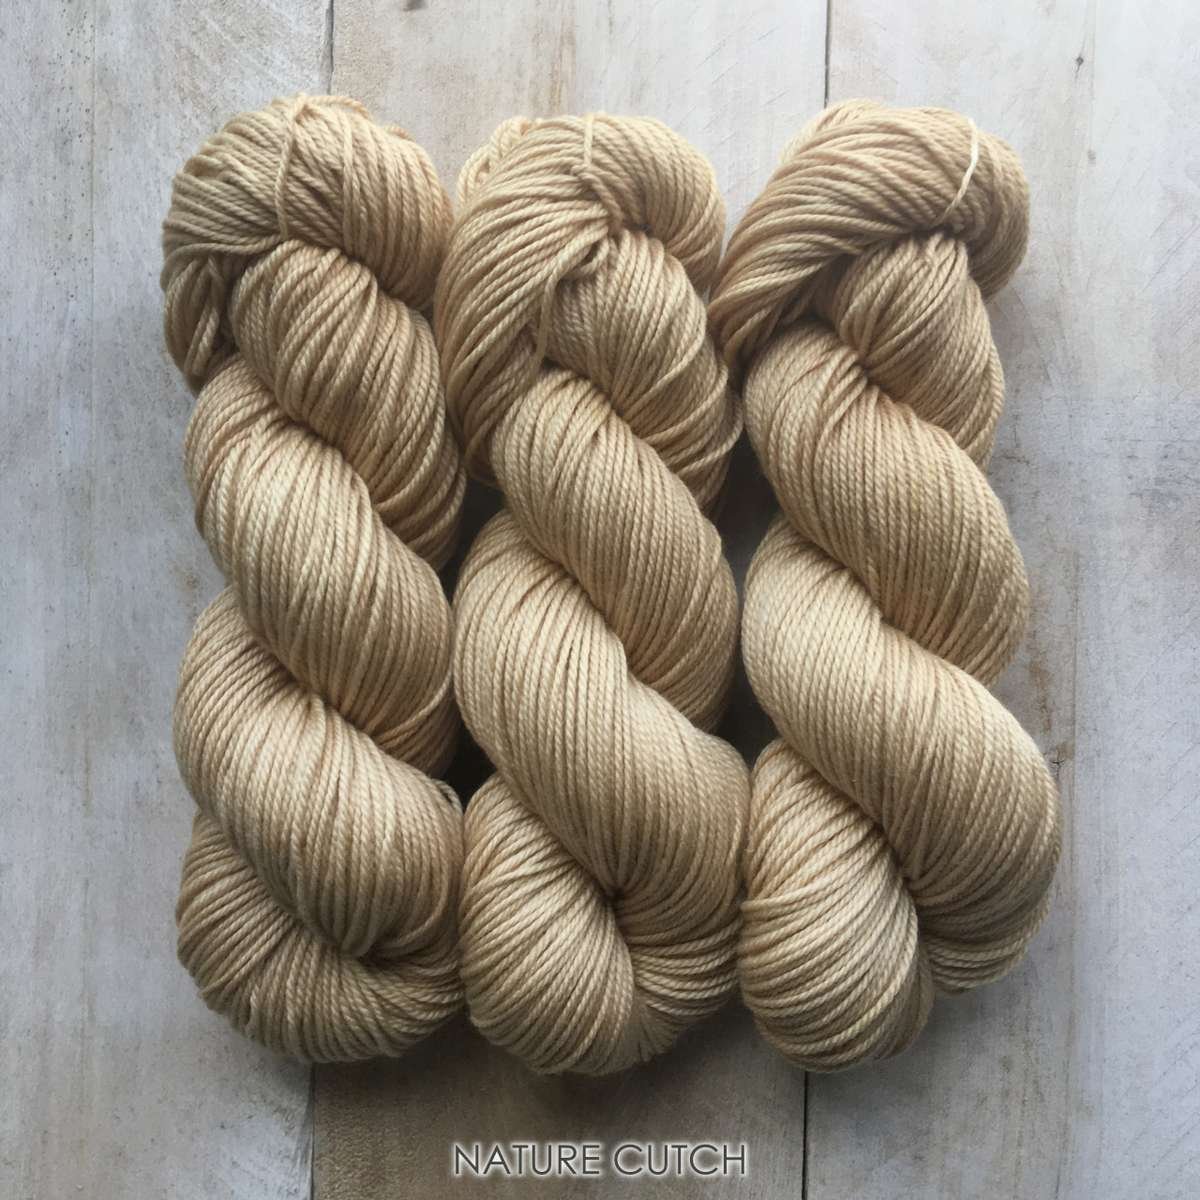 Hand-dyed yarn Louise Robert NATURE Cutch